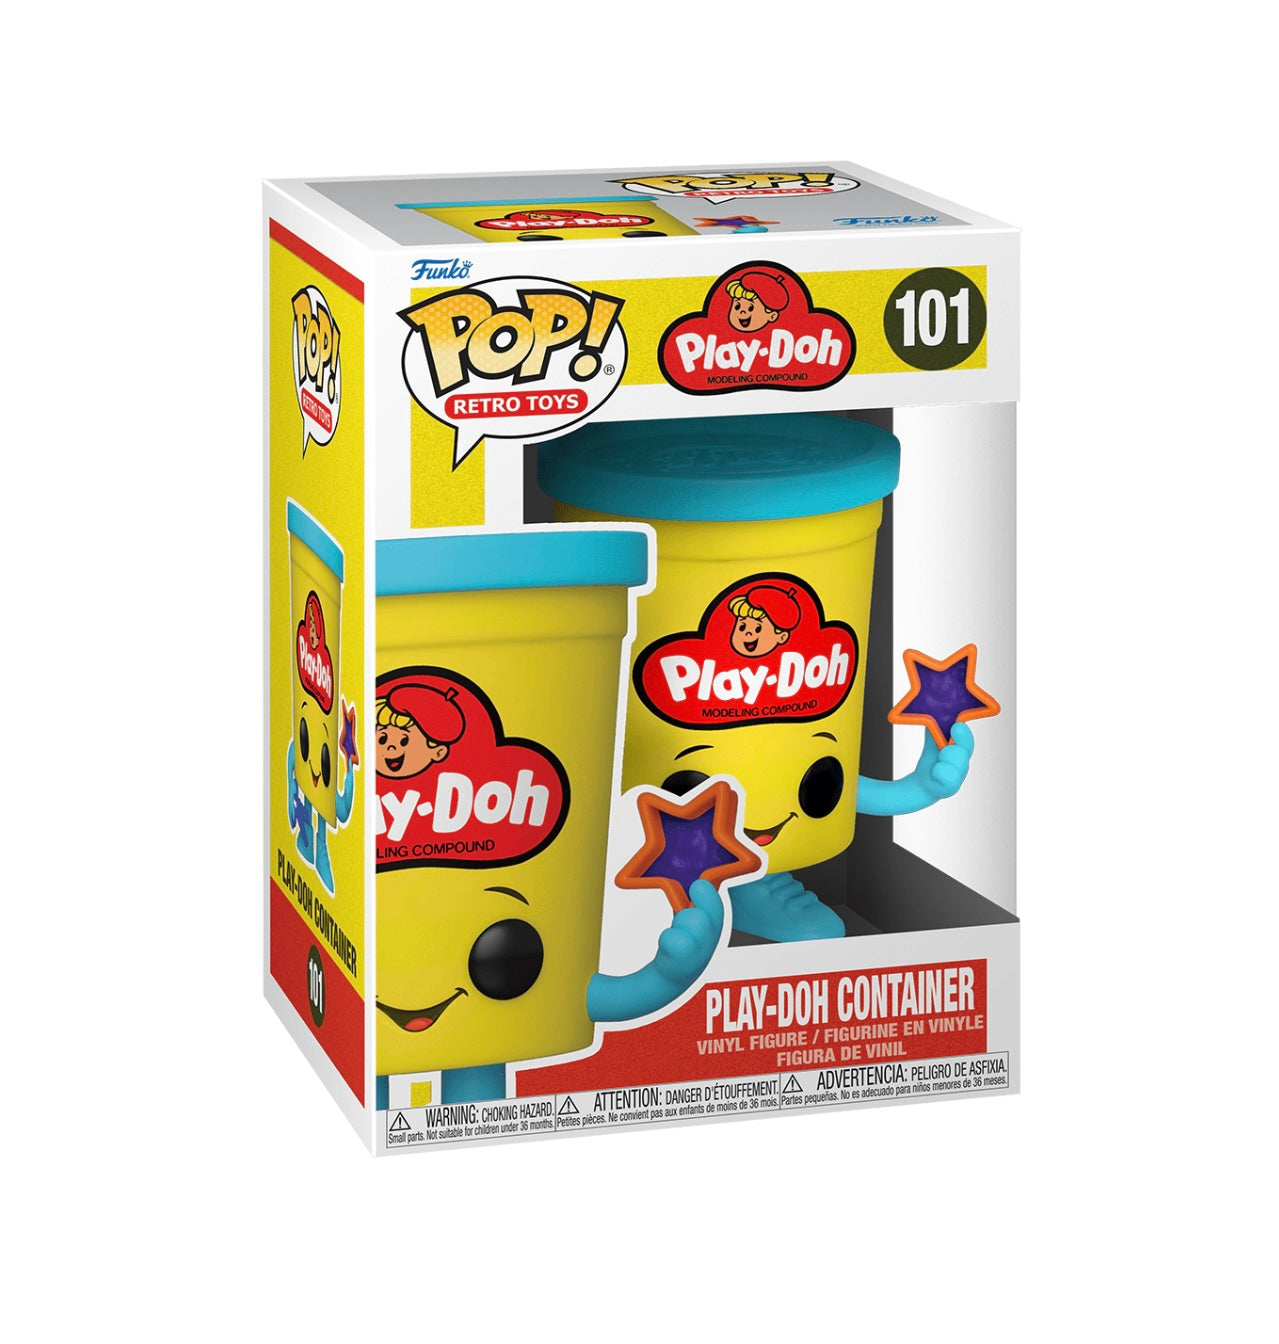 POP! Retro Toys Play Doh #101